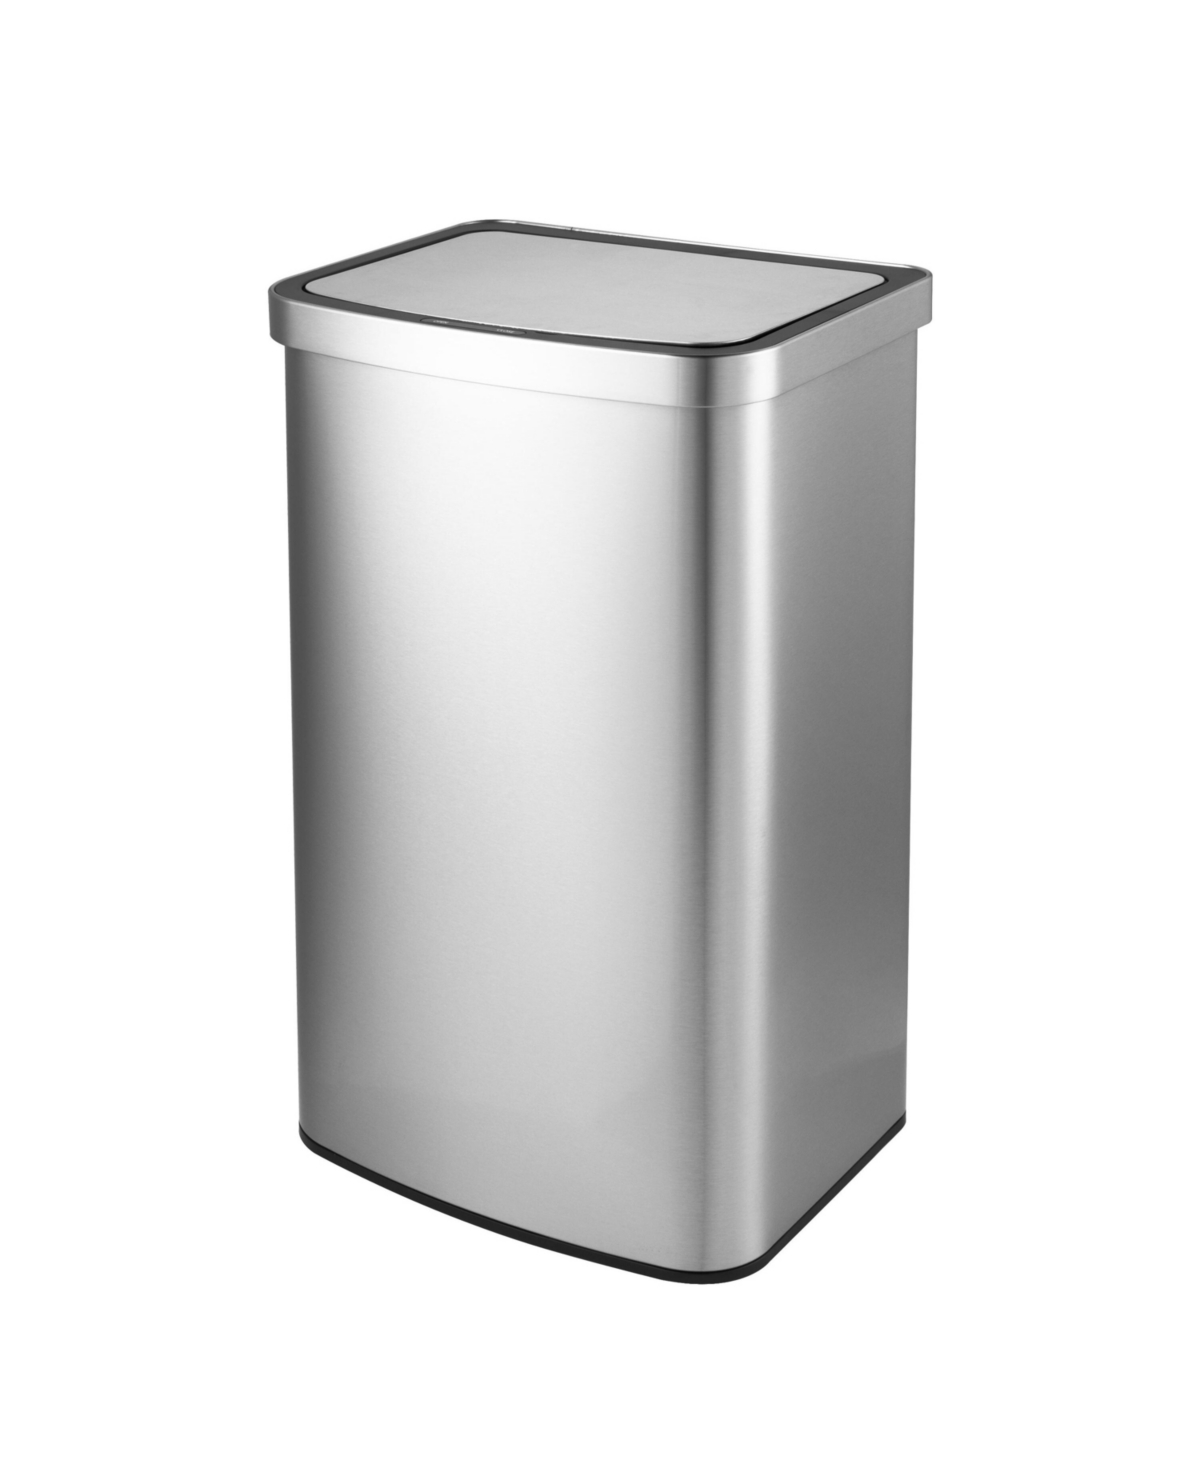 15.6 Gal./60 Liter Stainless Steel Rectangular Motion Sensor Trash Can for Kitchen - Silver